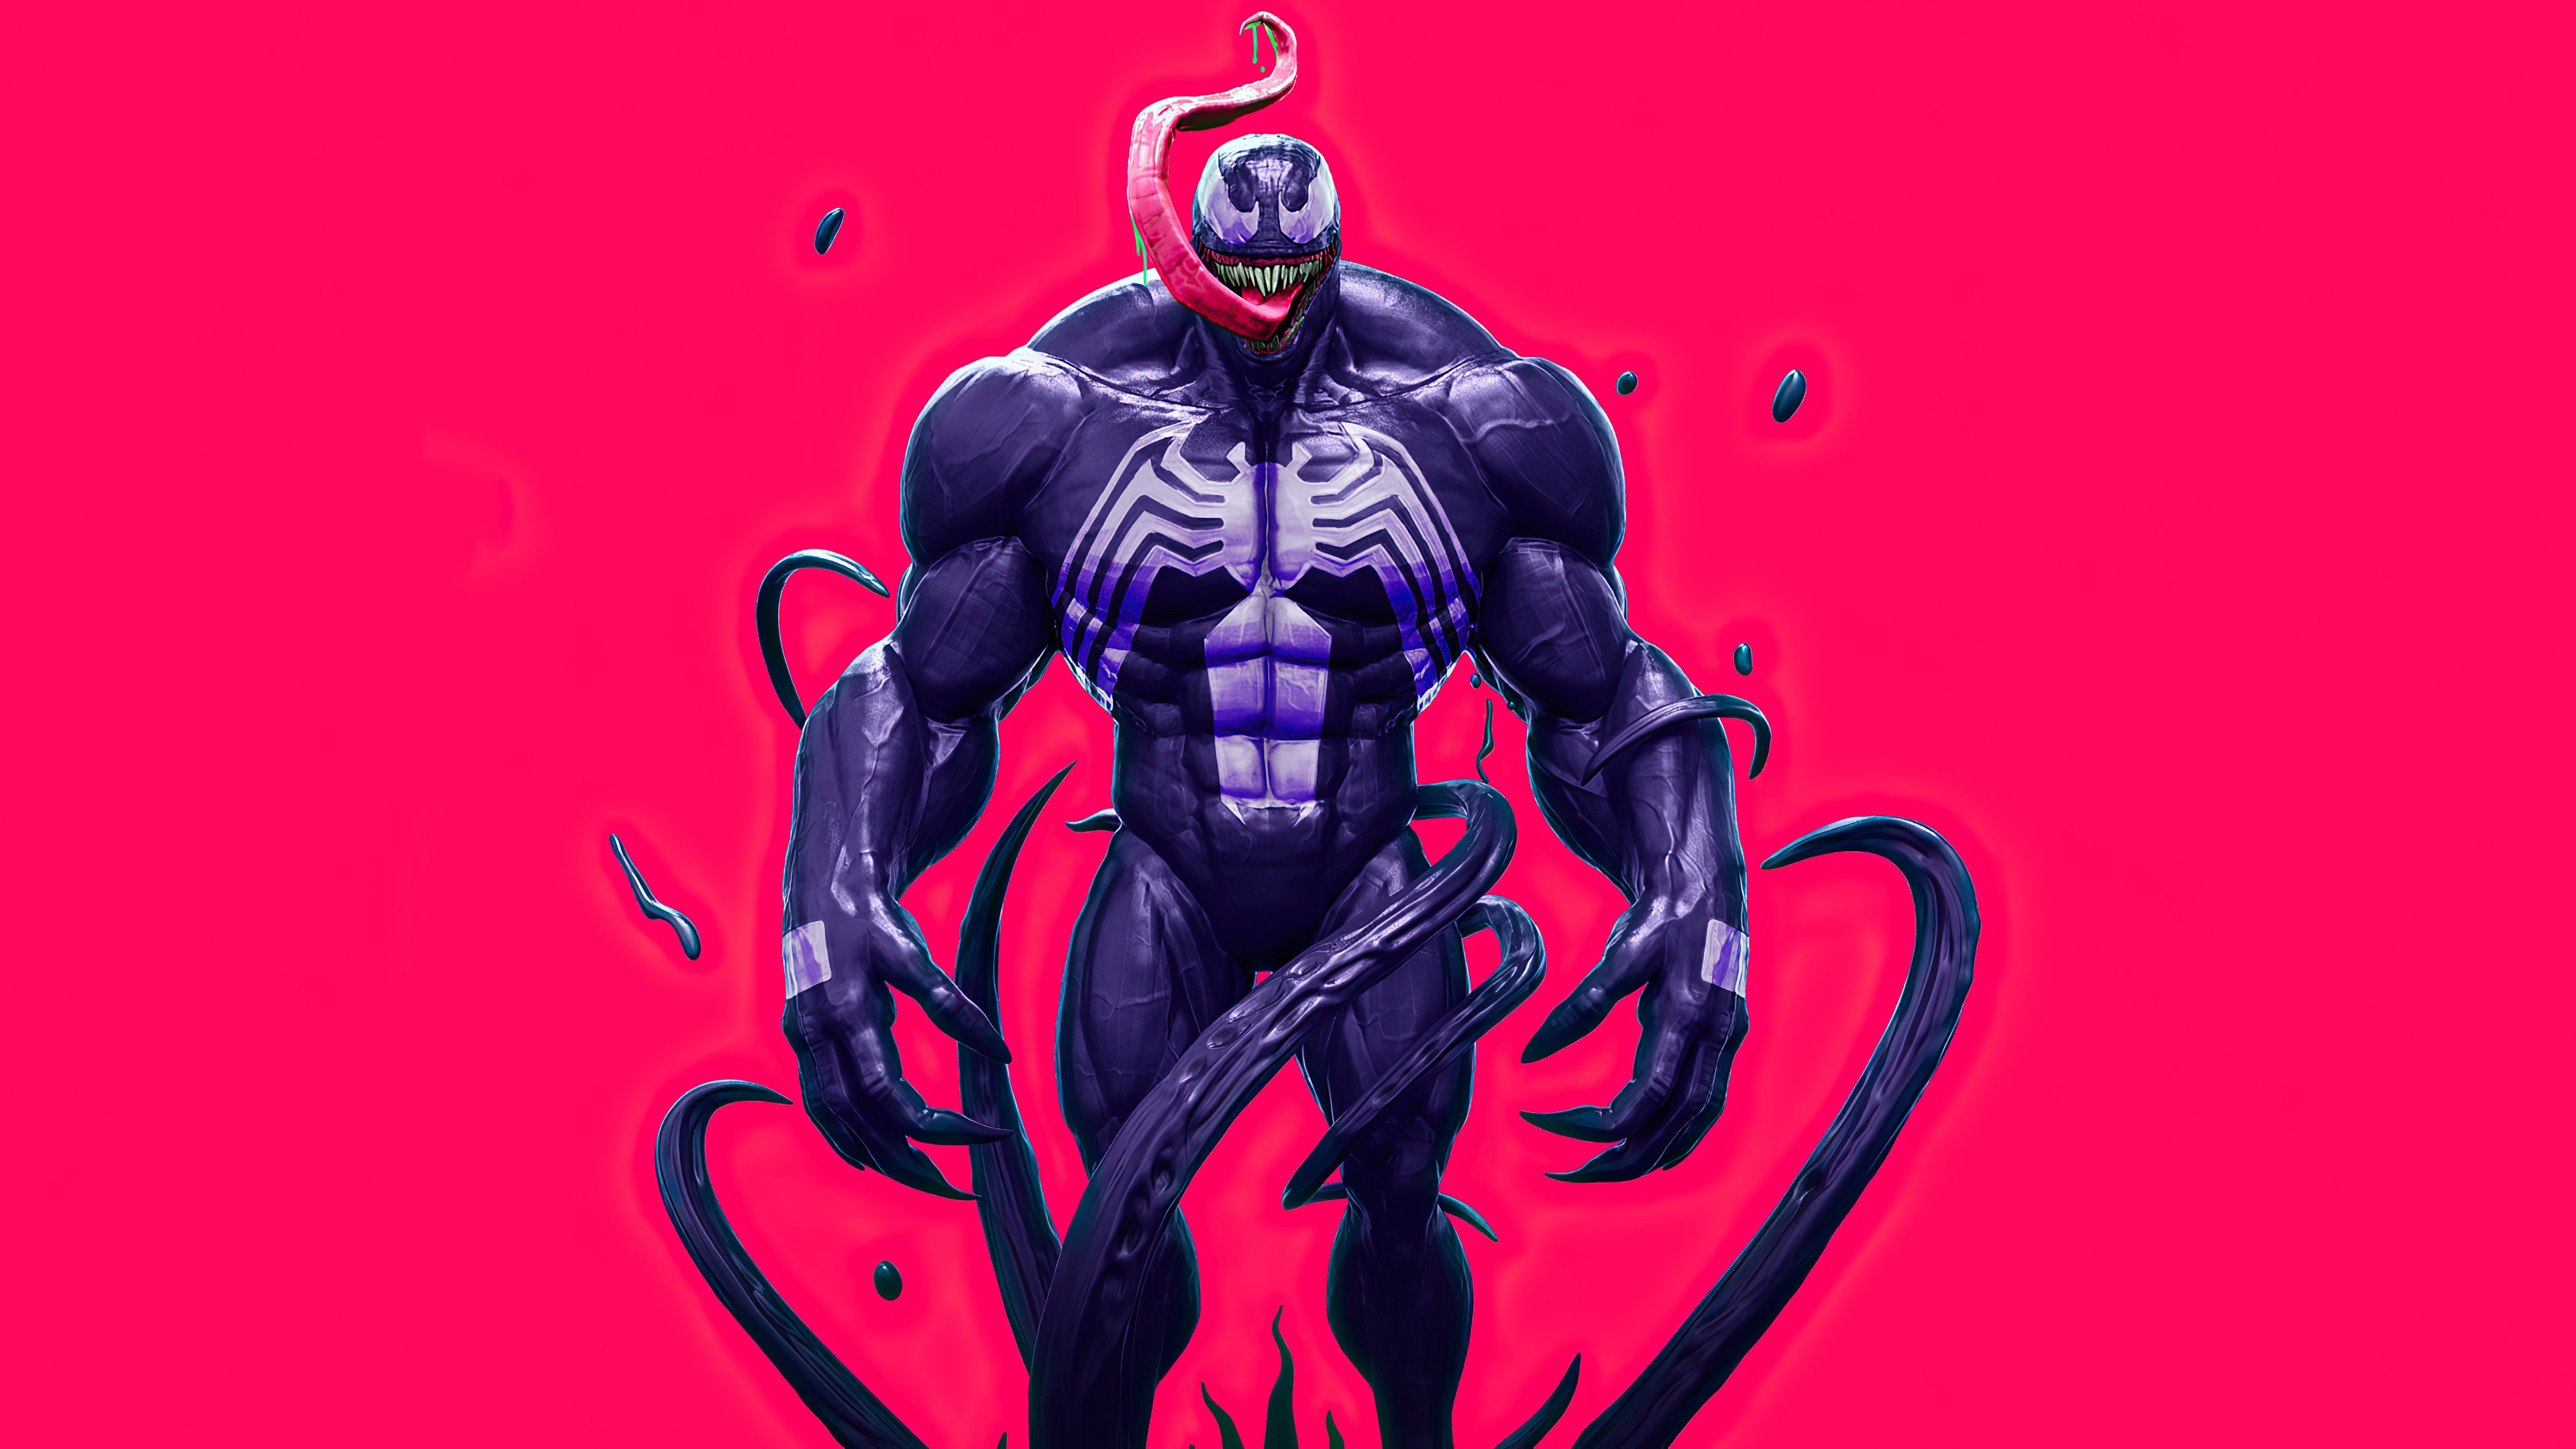 Venom 2020 4k Art, HD Superheroes, 4k Wallpaper, Image, Background, Photo and Picture